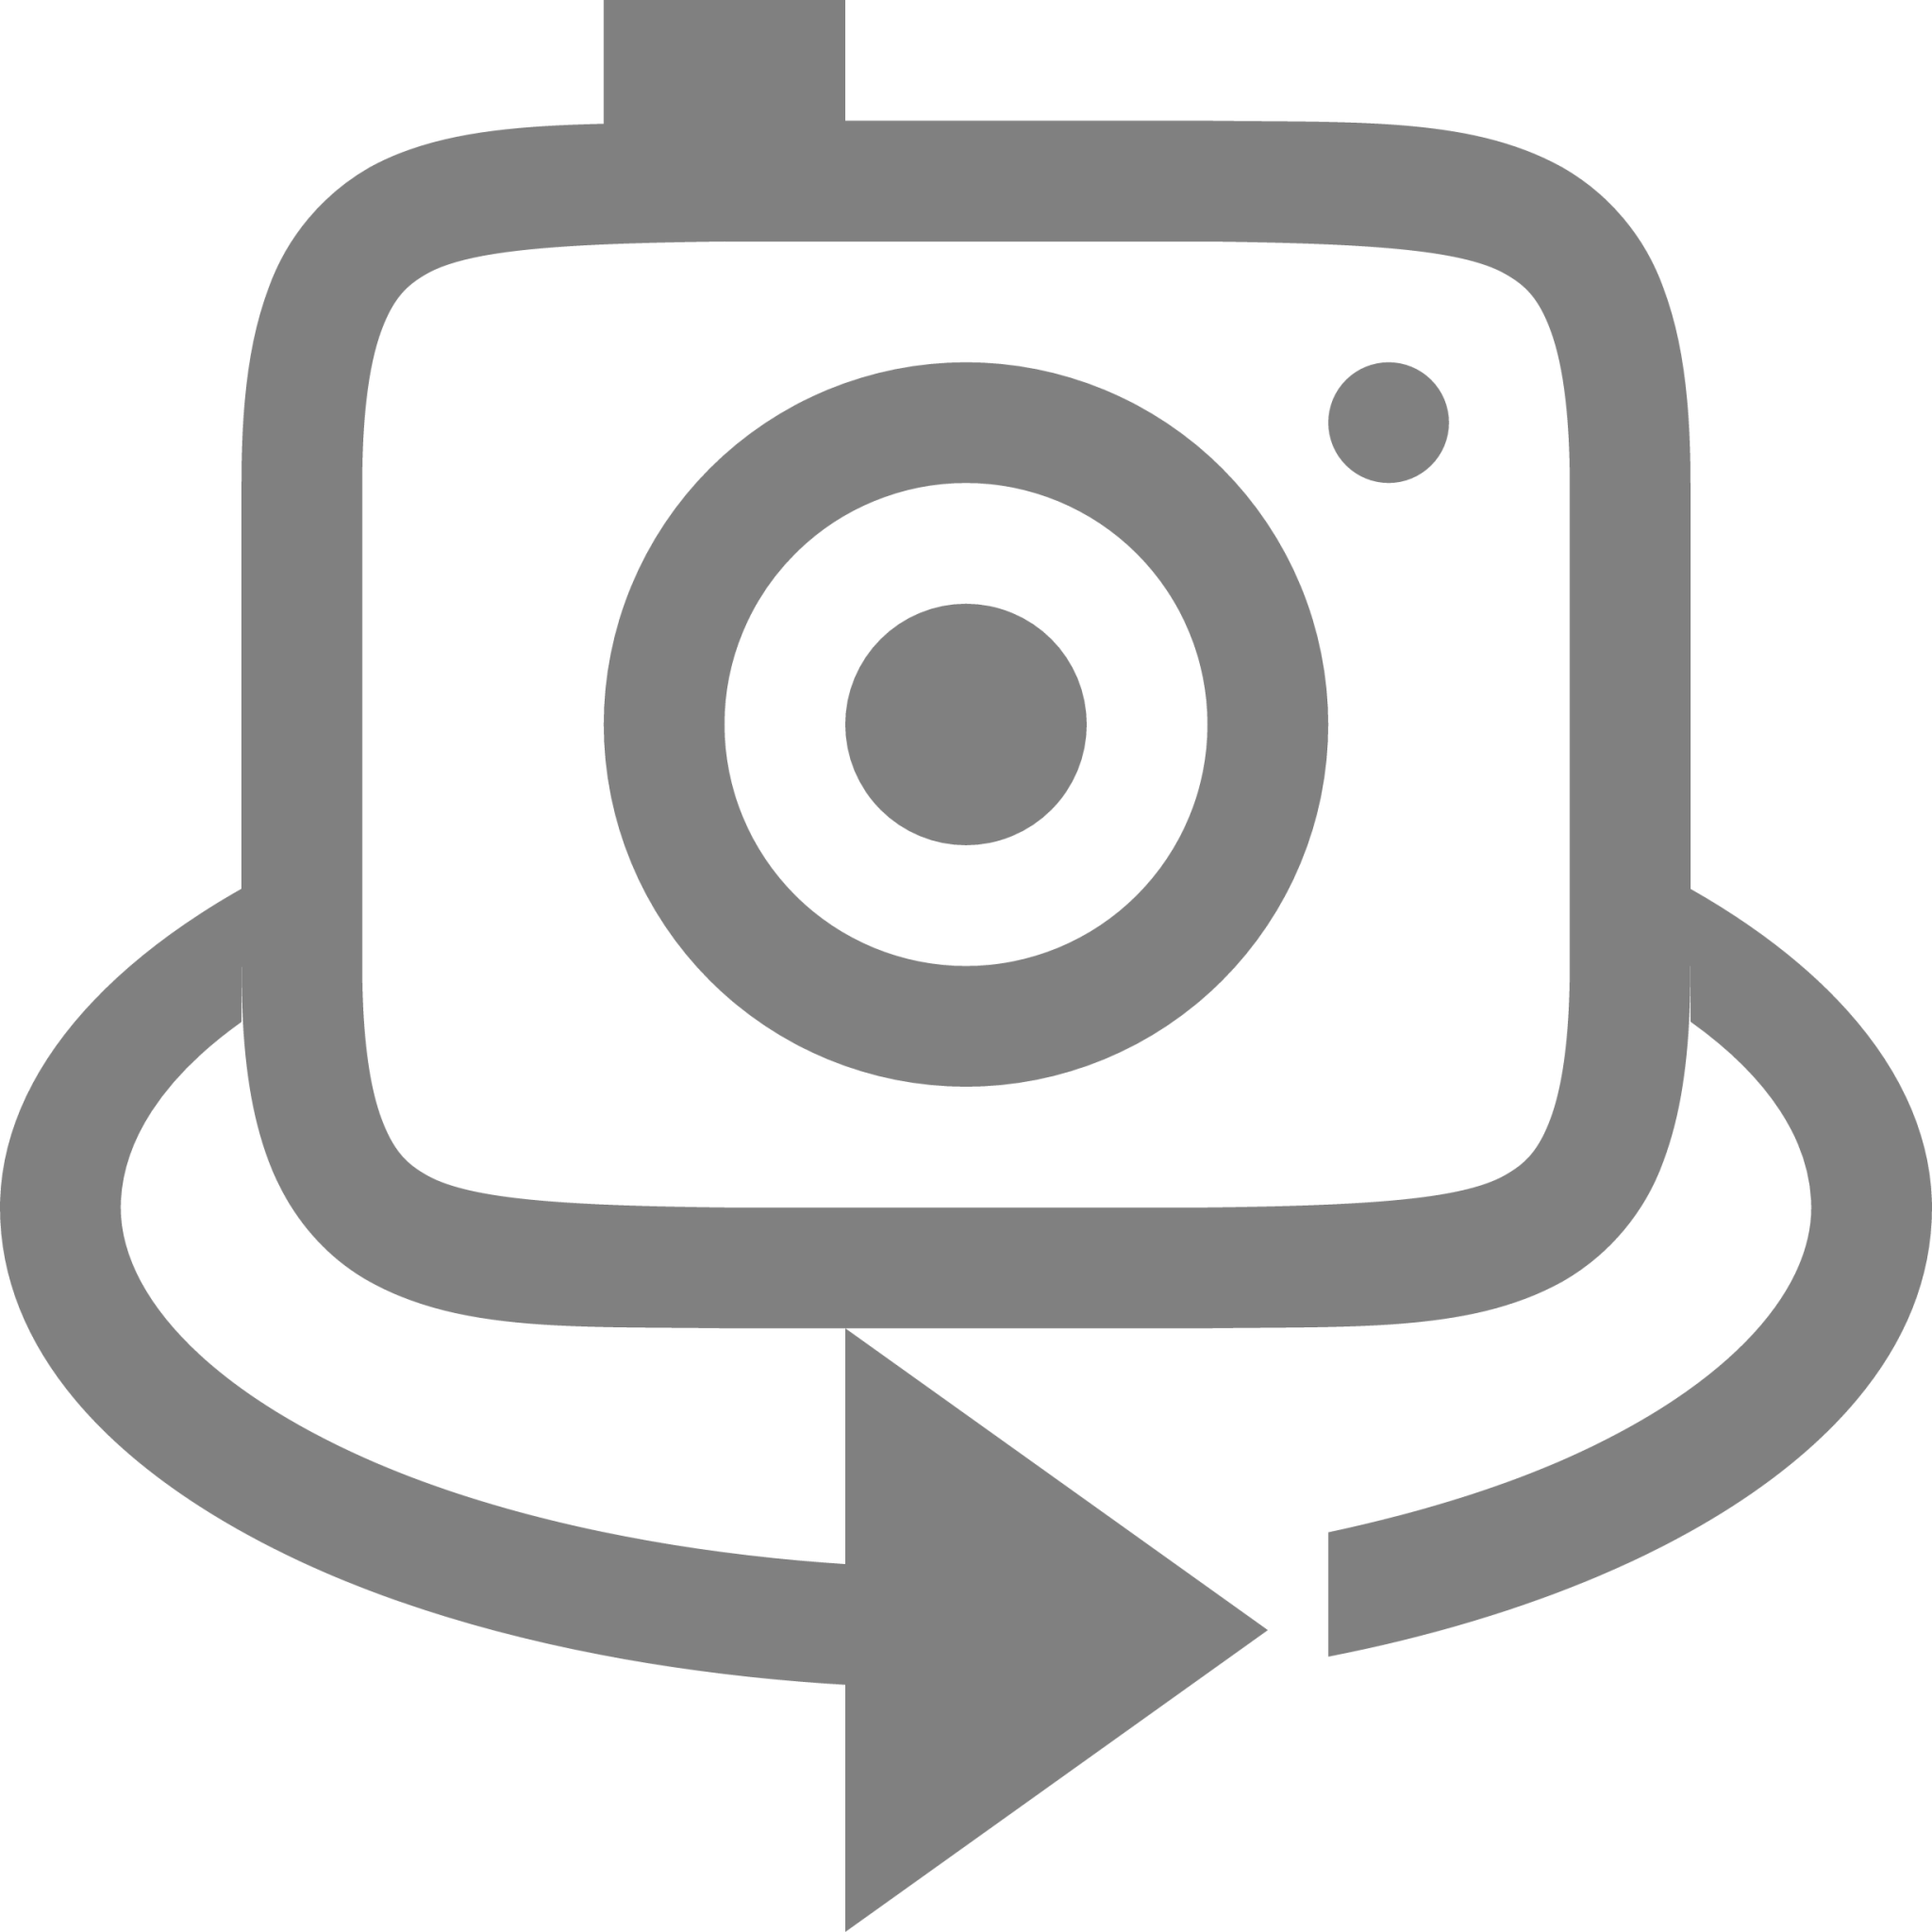 camera switch symbolic icon